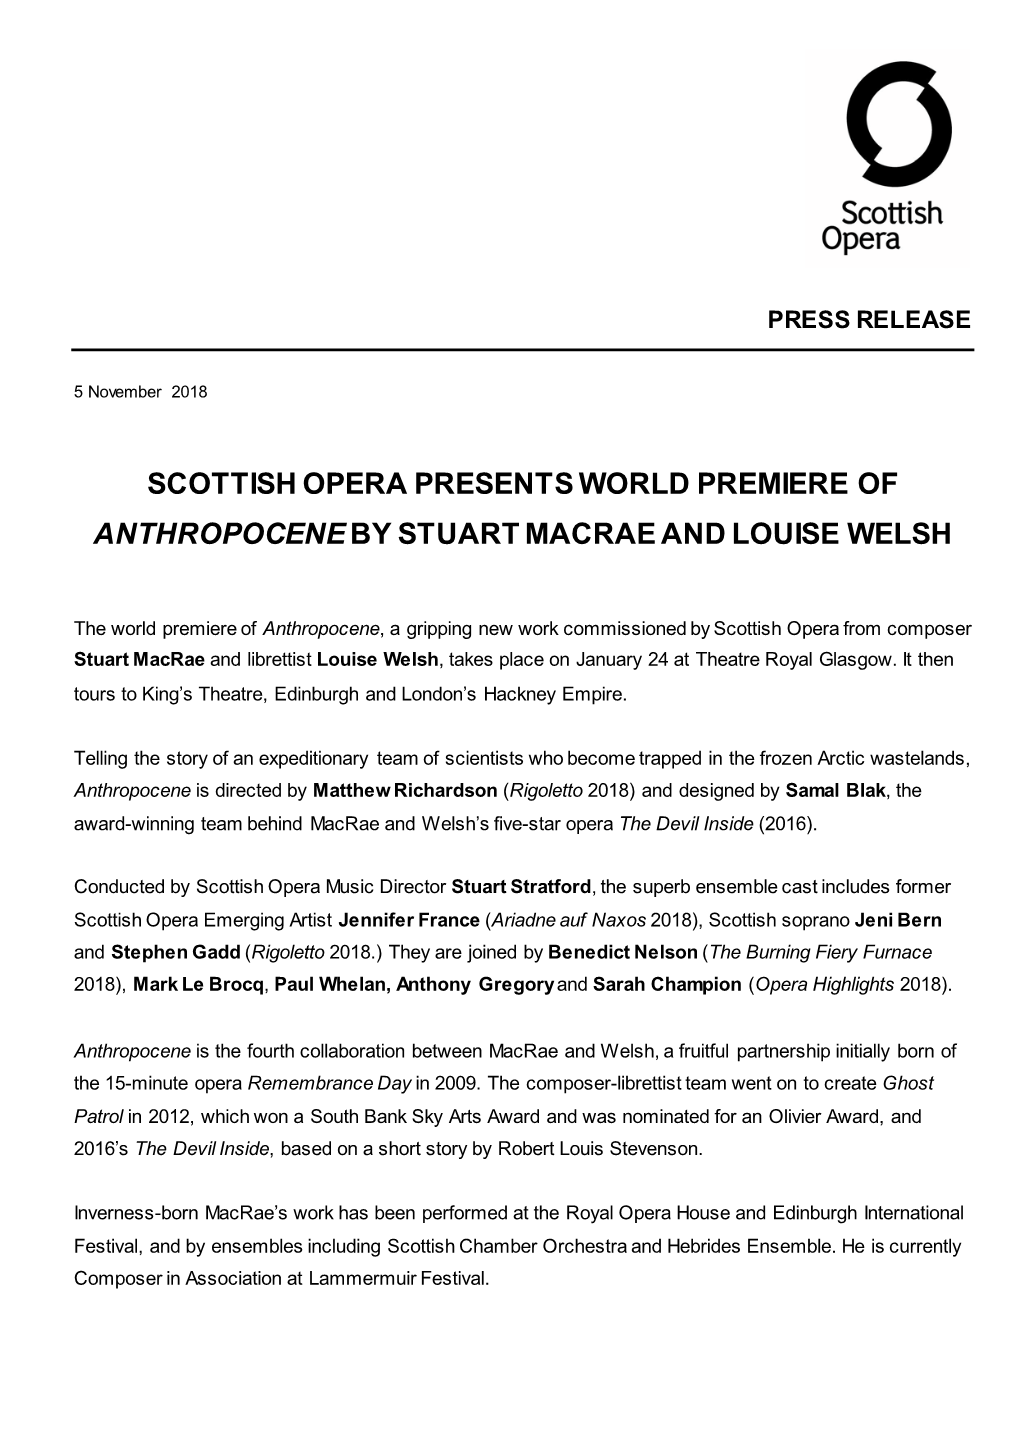 Scottish Opera Presents World Premiere of Anthropocene by Stuart Macrae and Louise Welsh